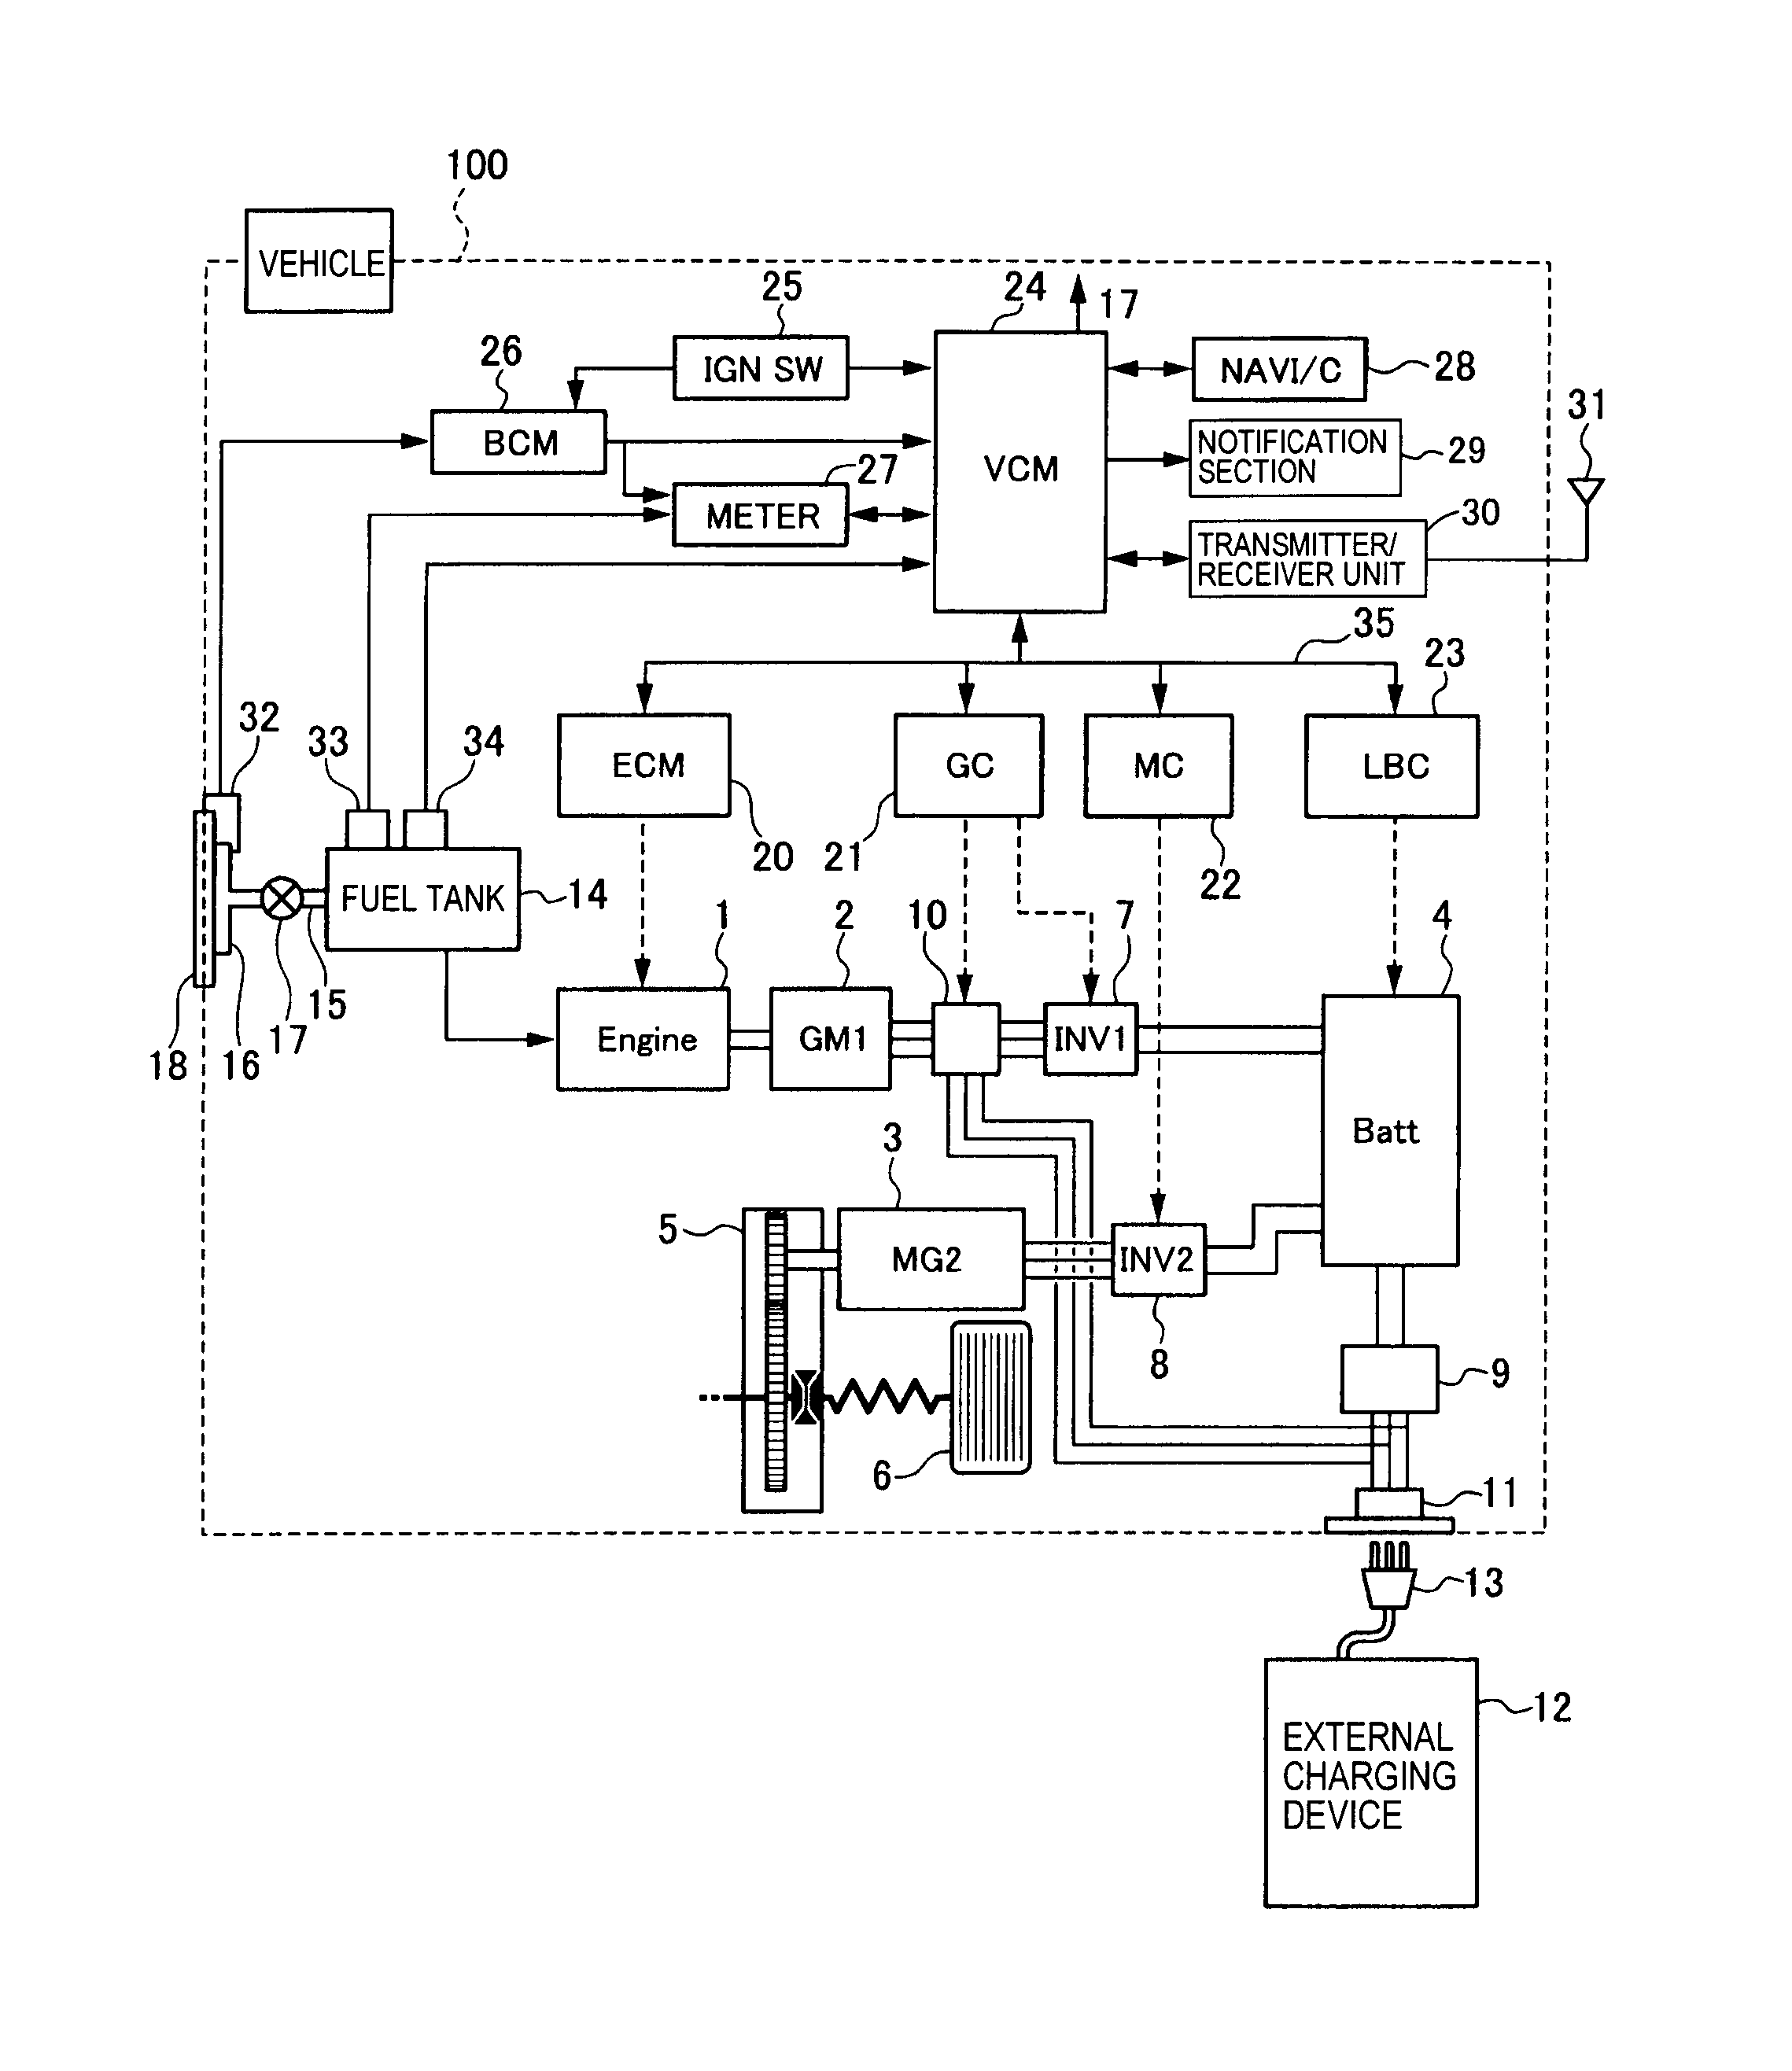 ms sedco tdm-hc wiring diagram